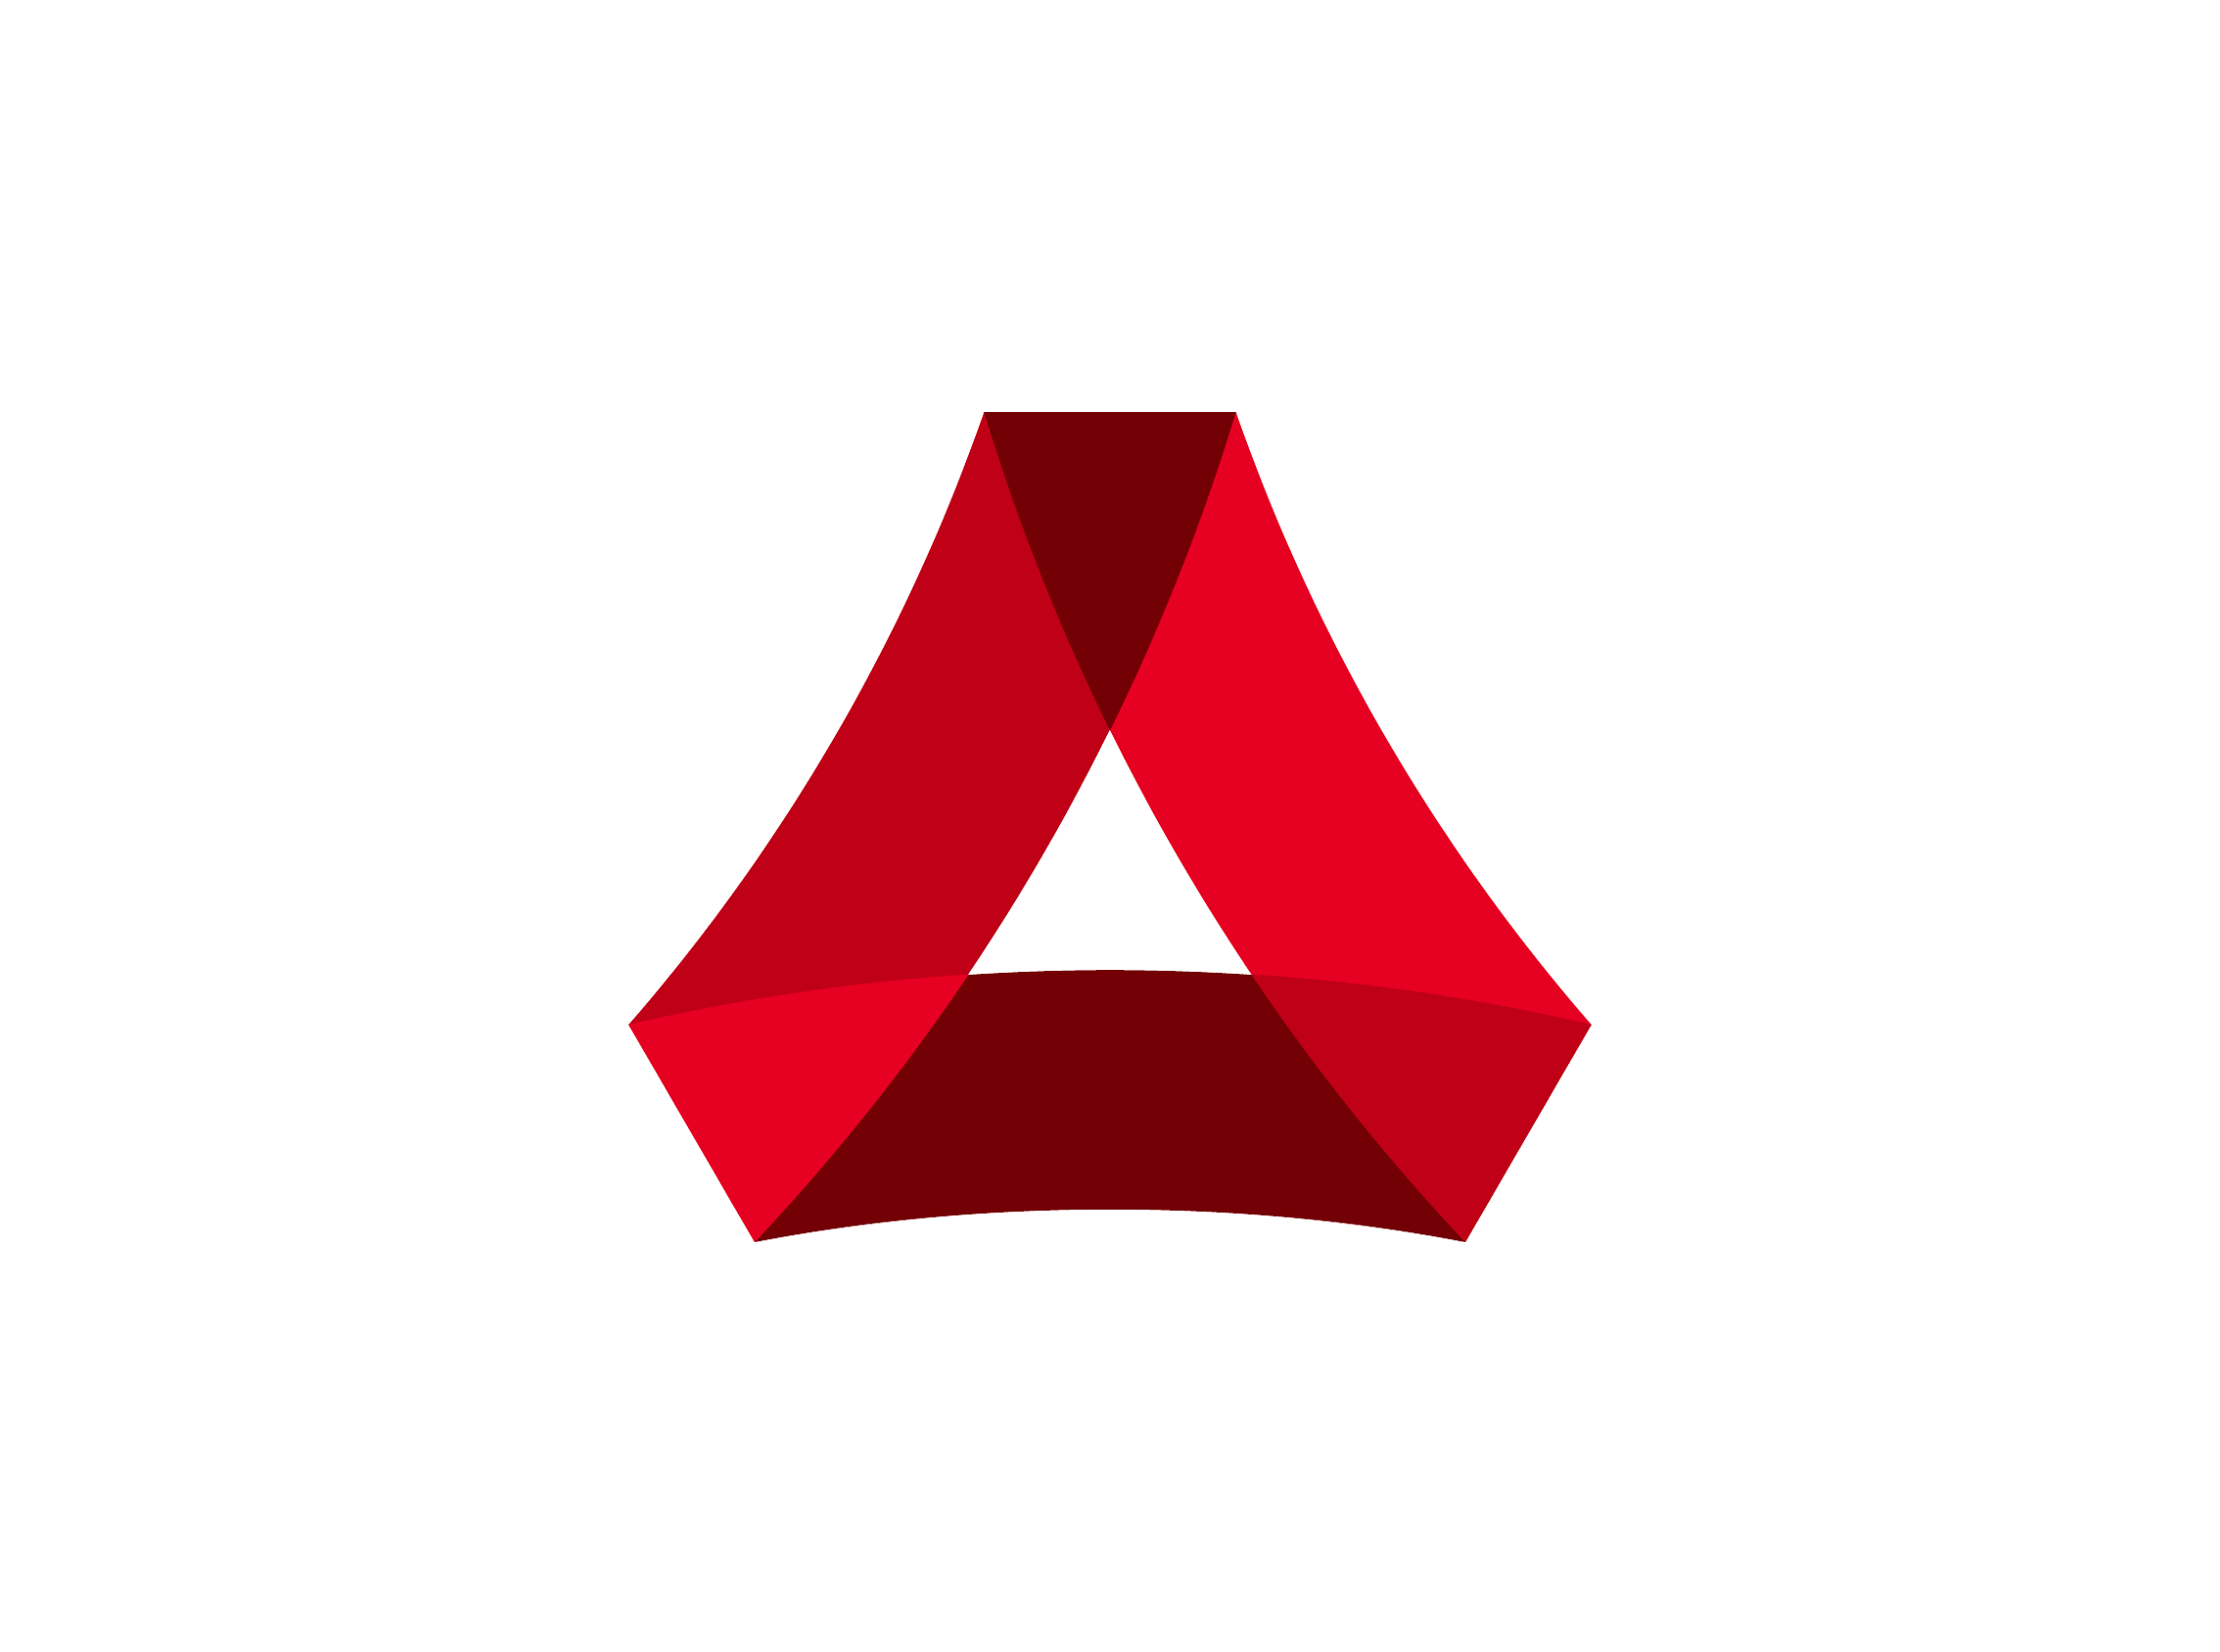 White Box with Red Triangle Logo - White Box With Red Triangle Logo